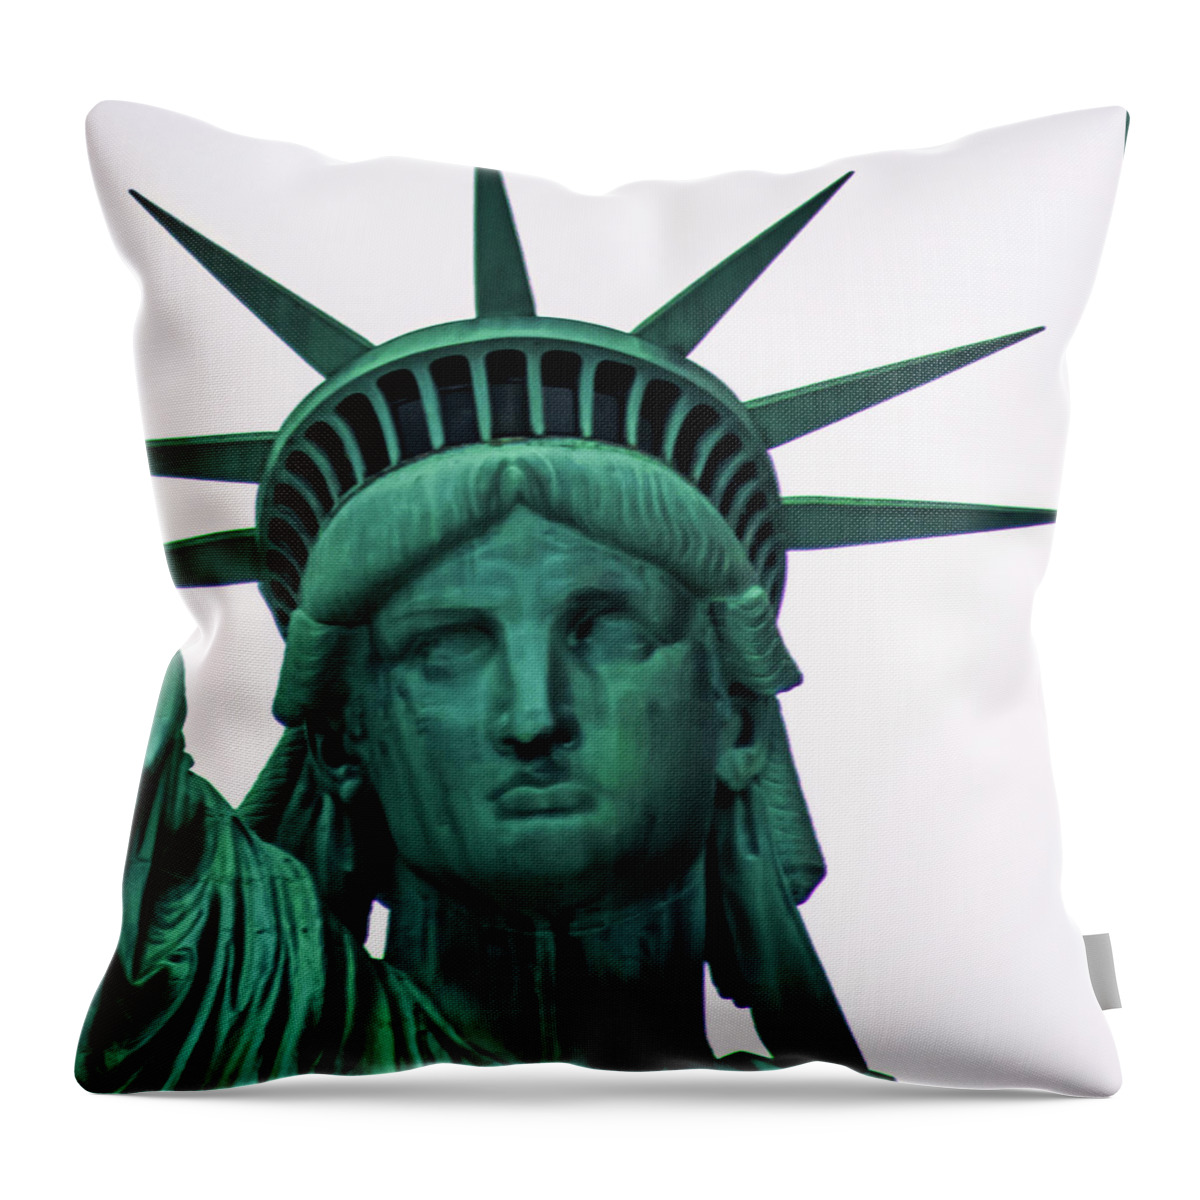 Landmark Throw Pillow featuring the photograph Liberty by Martin Newman